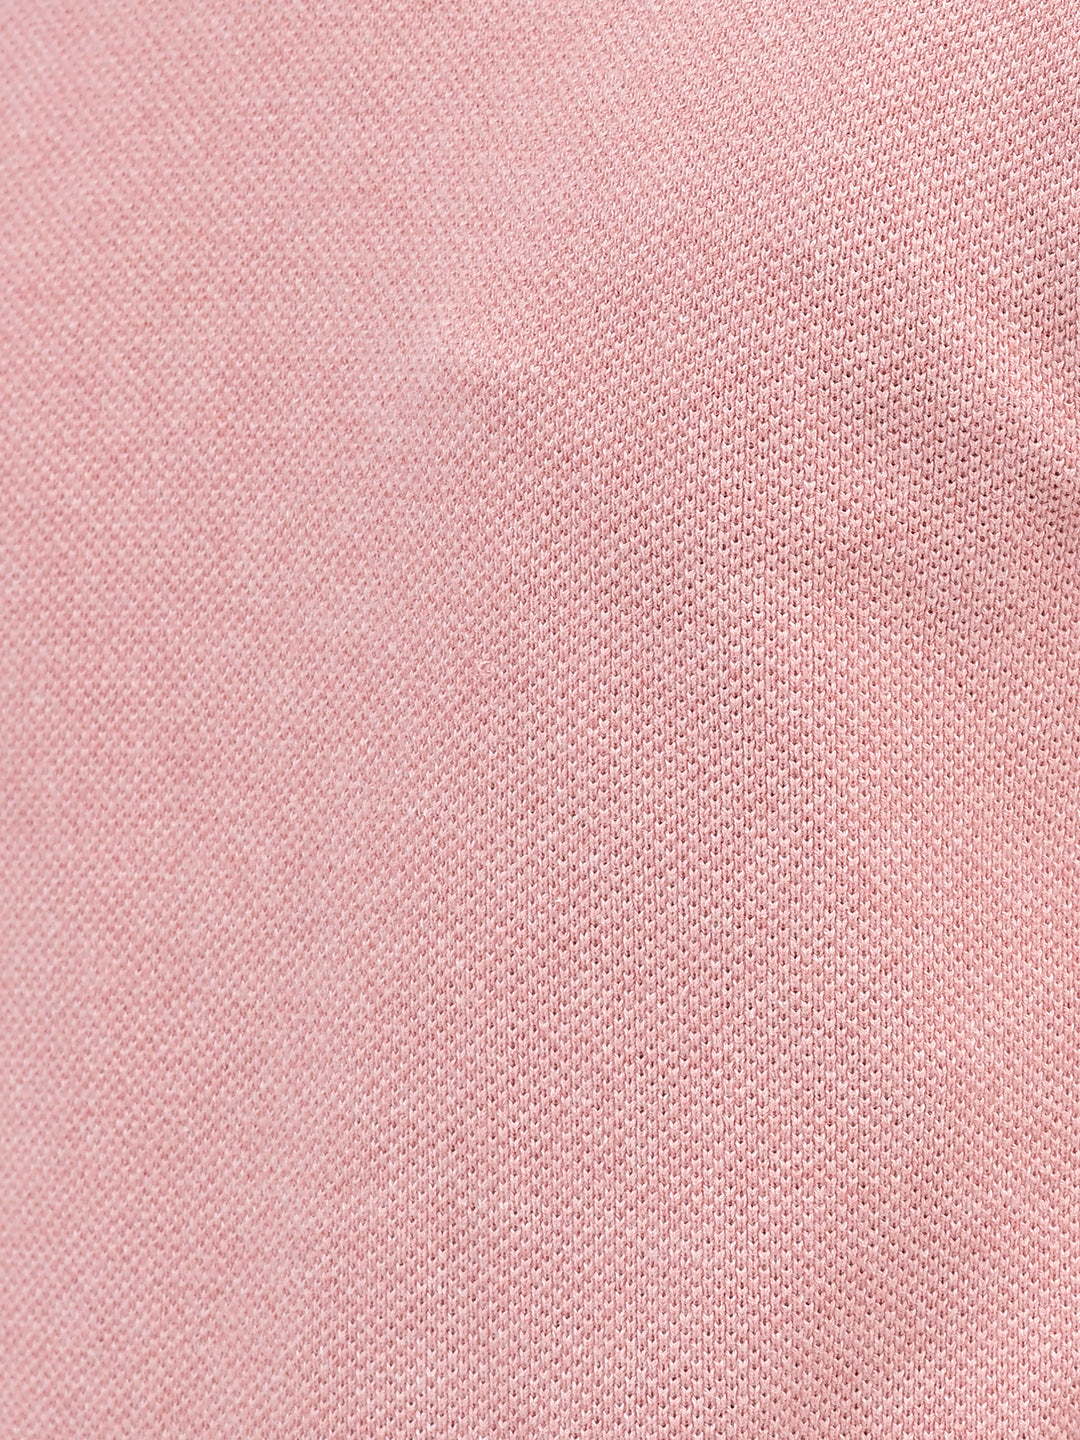 Pink Cotton Sweater-Men Sweaters-Crimsoune Club